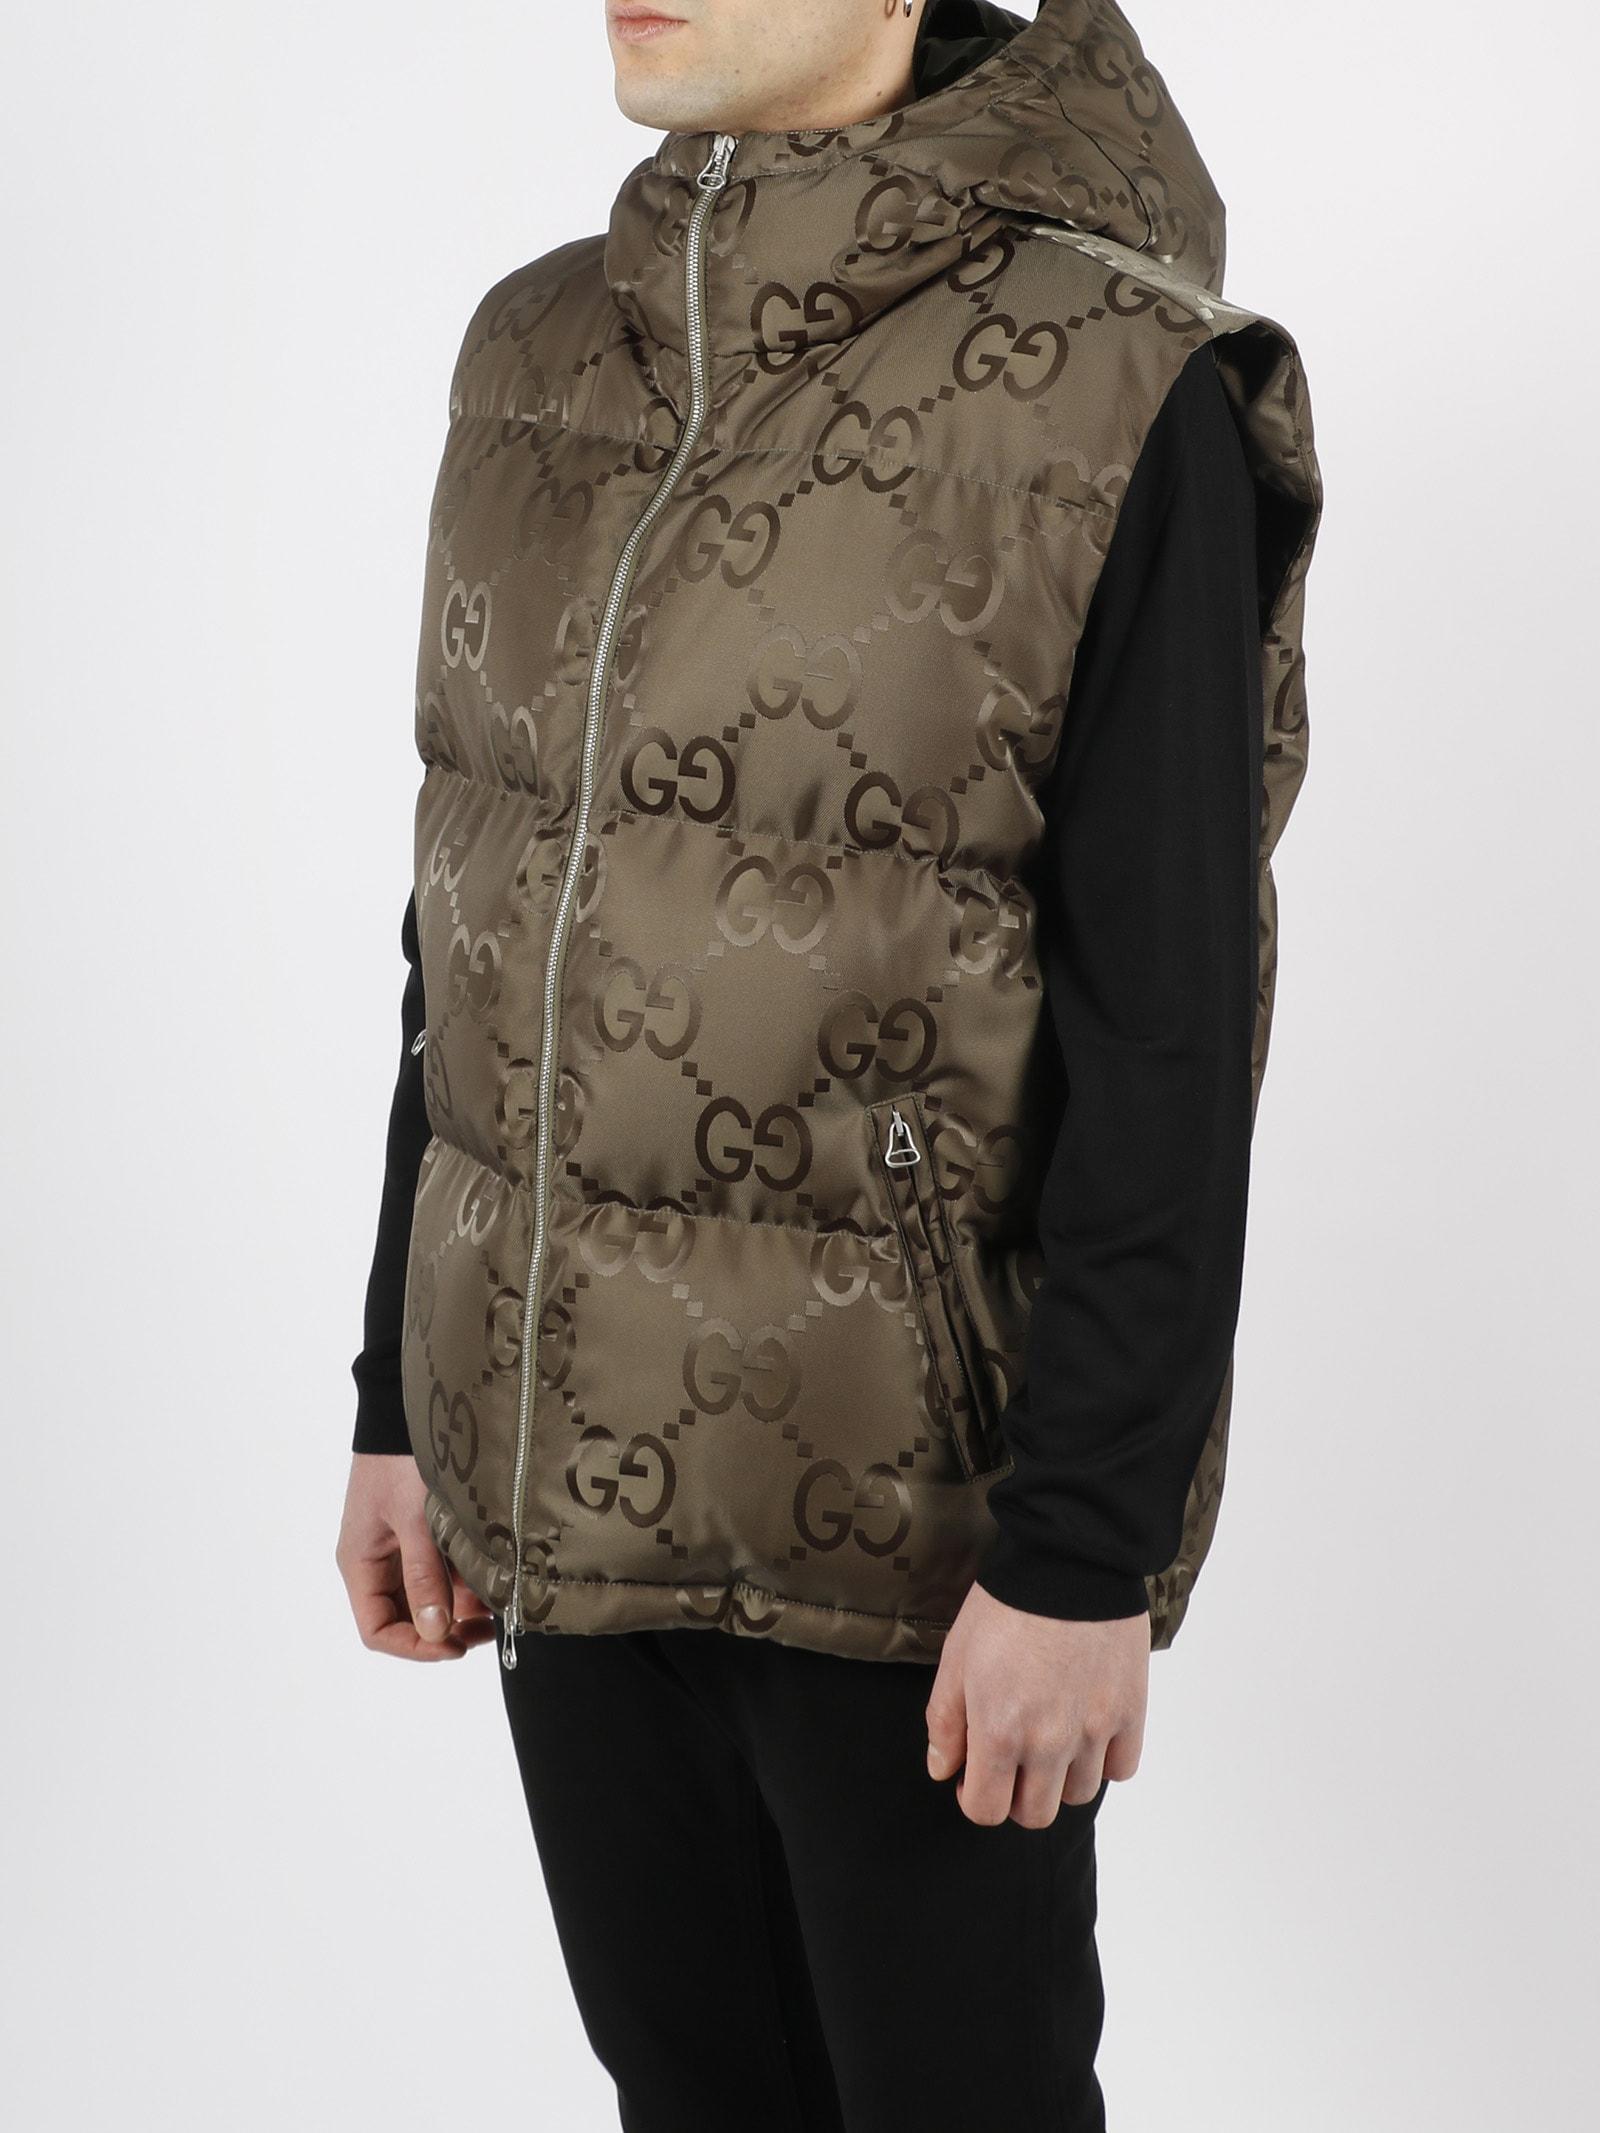 Gucci GG Hooded Puffer Jacket in Beige